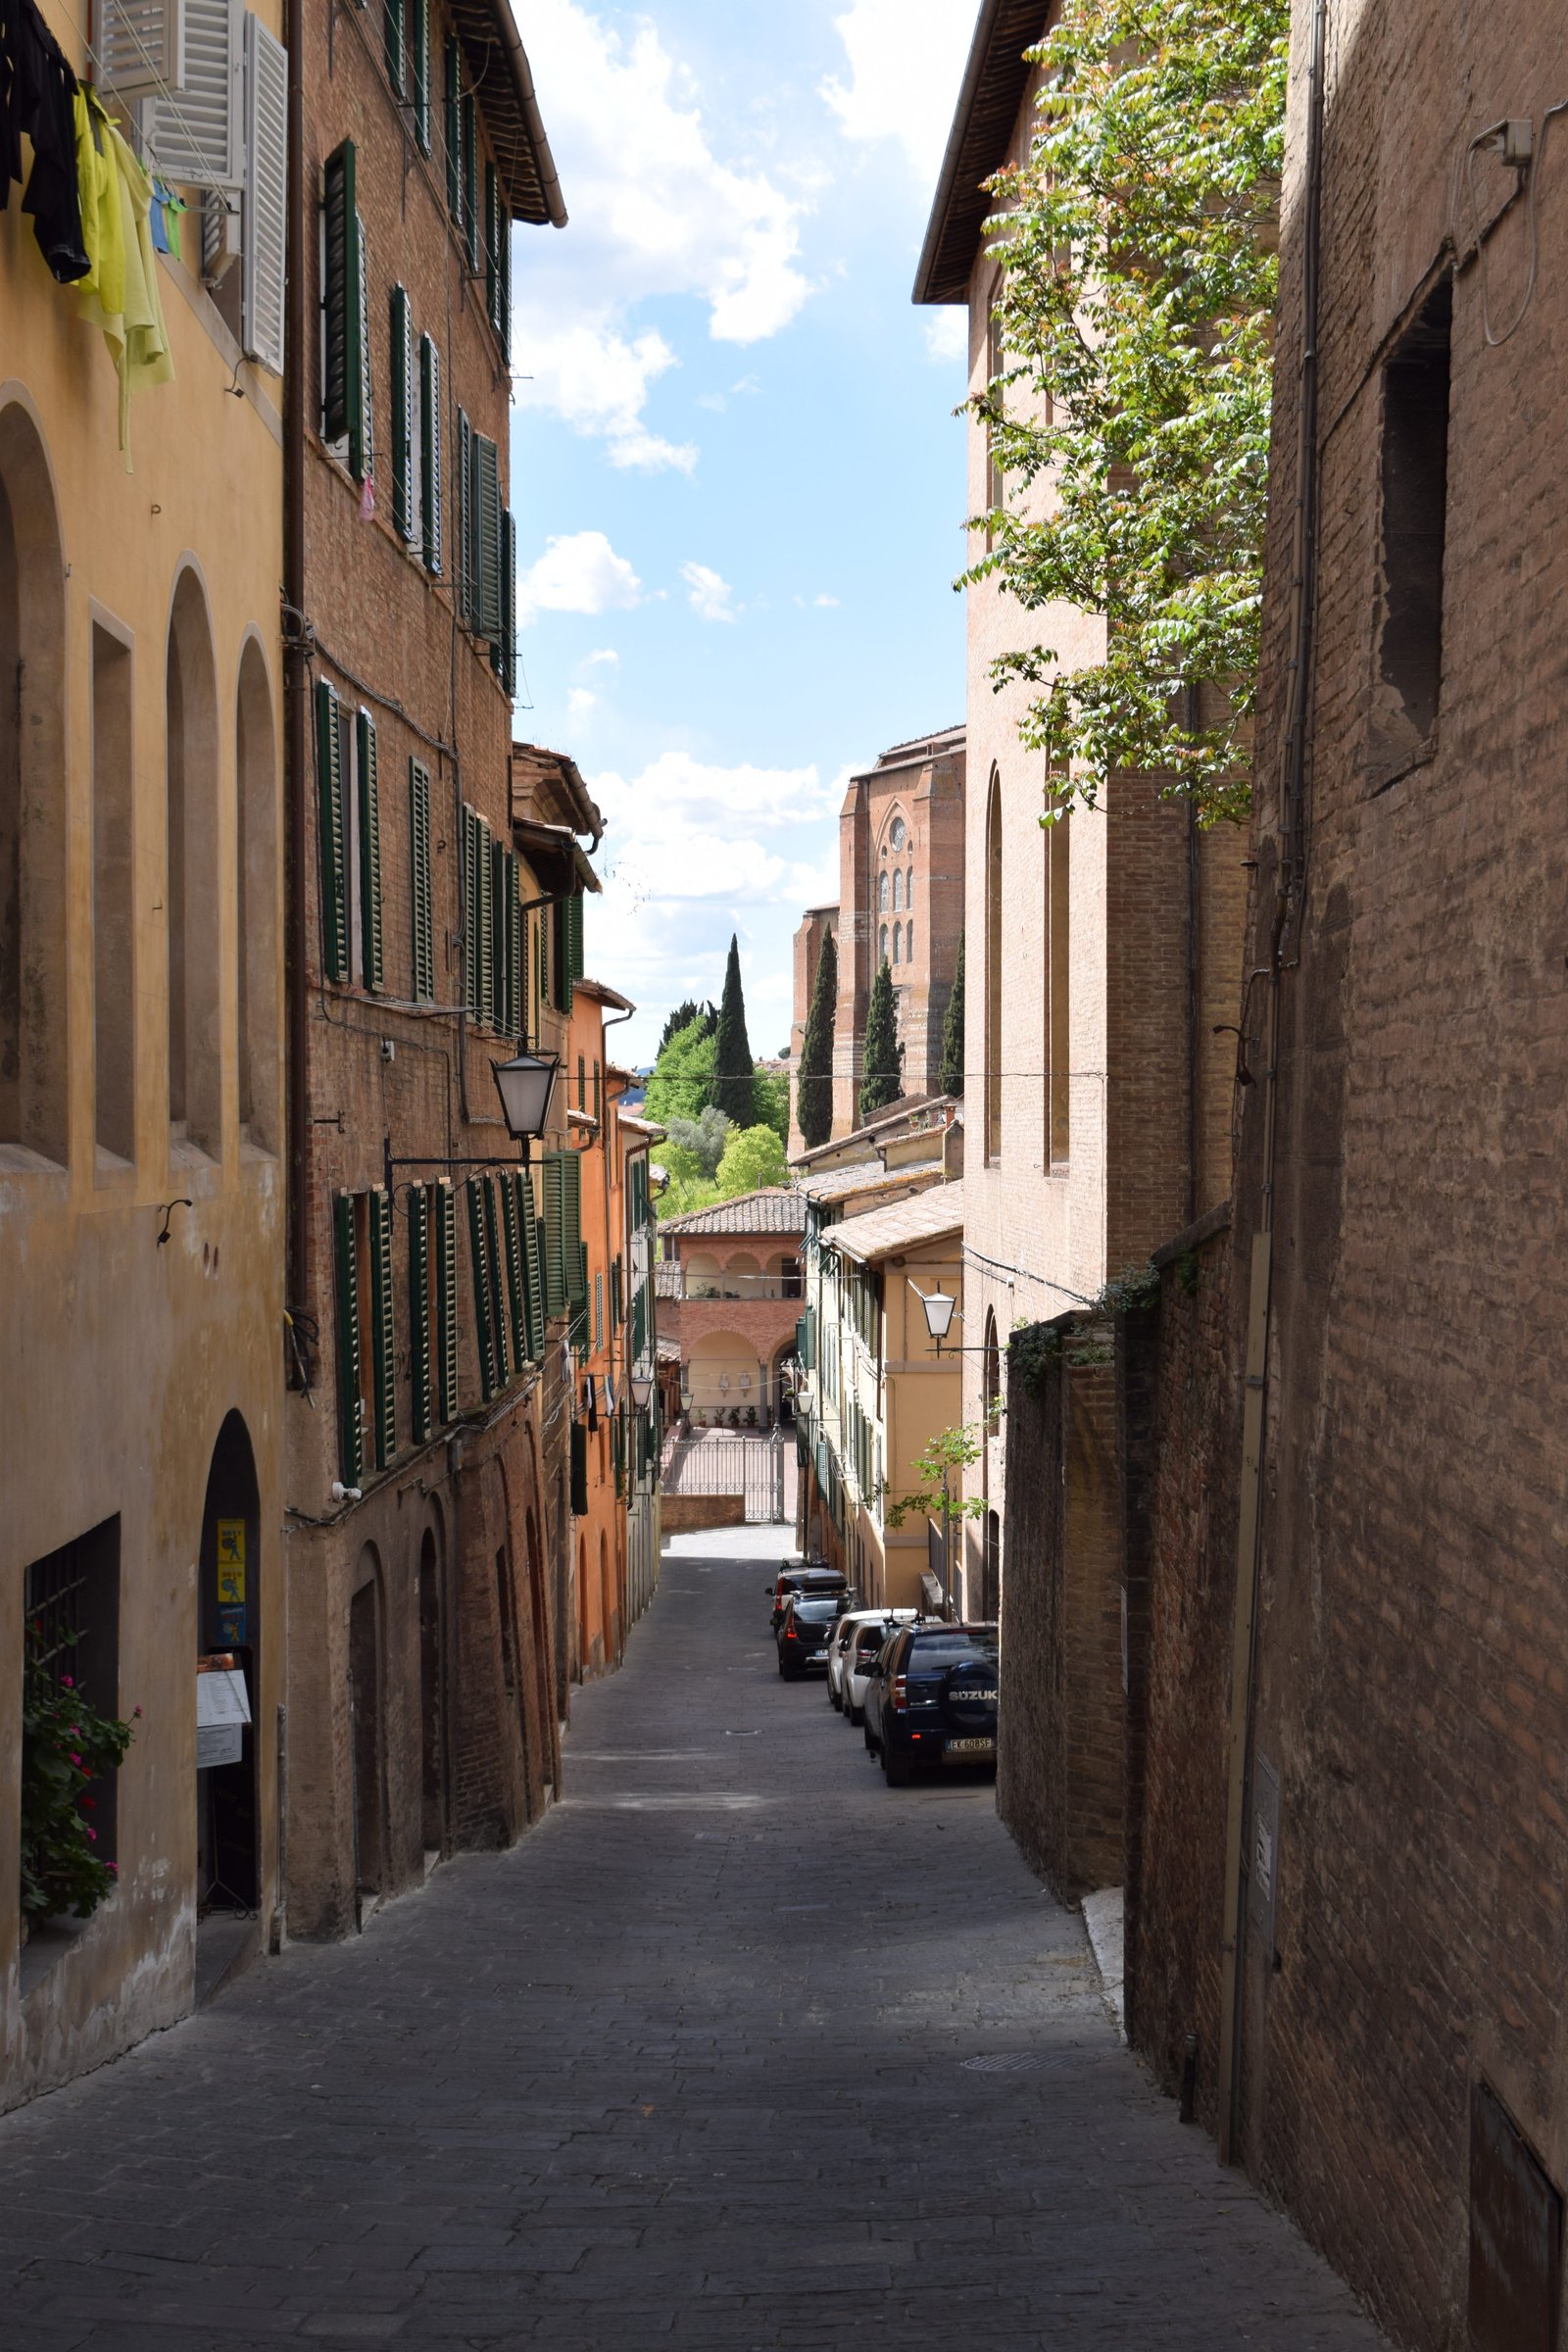 A street in Siena, Italy. ouritalianjourney.com